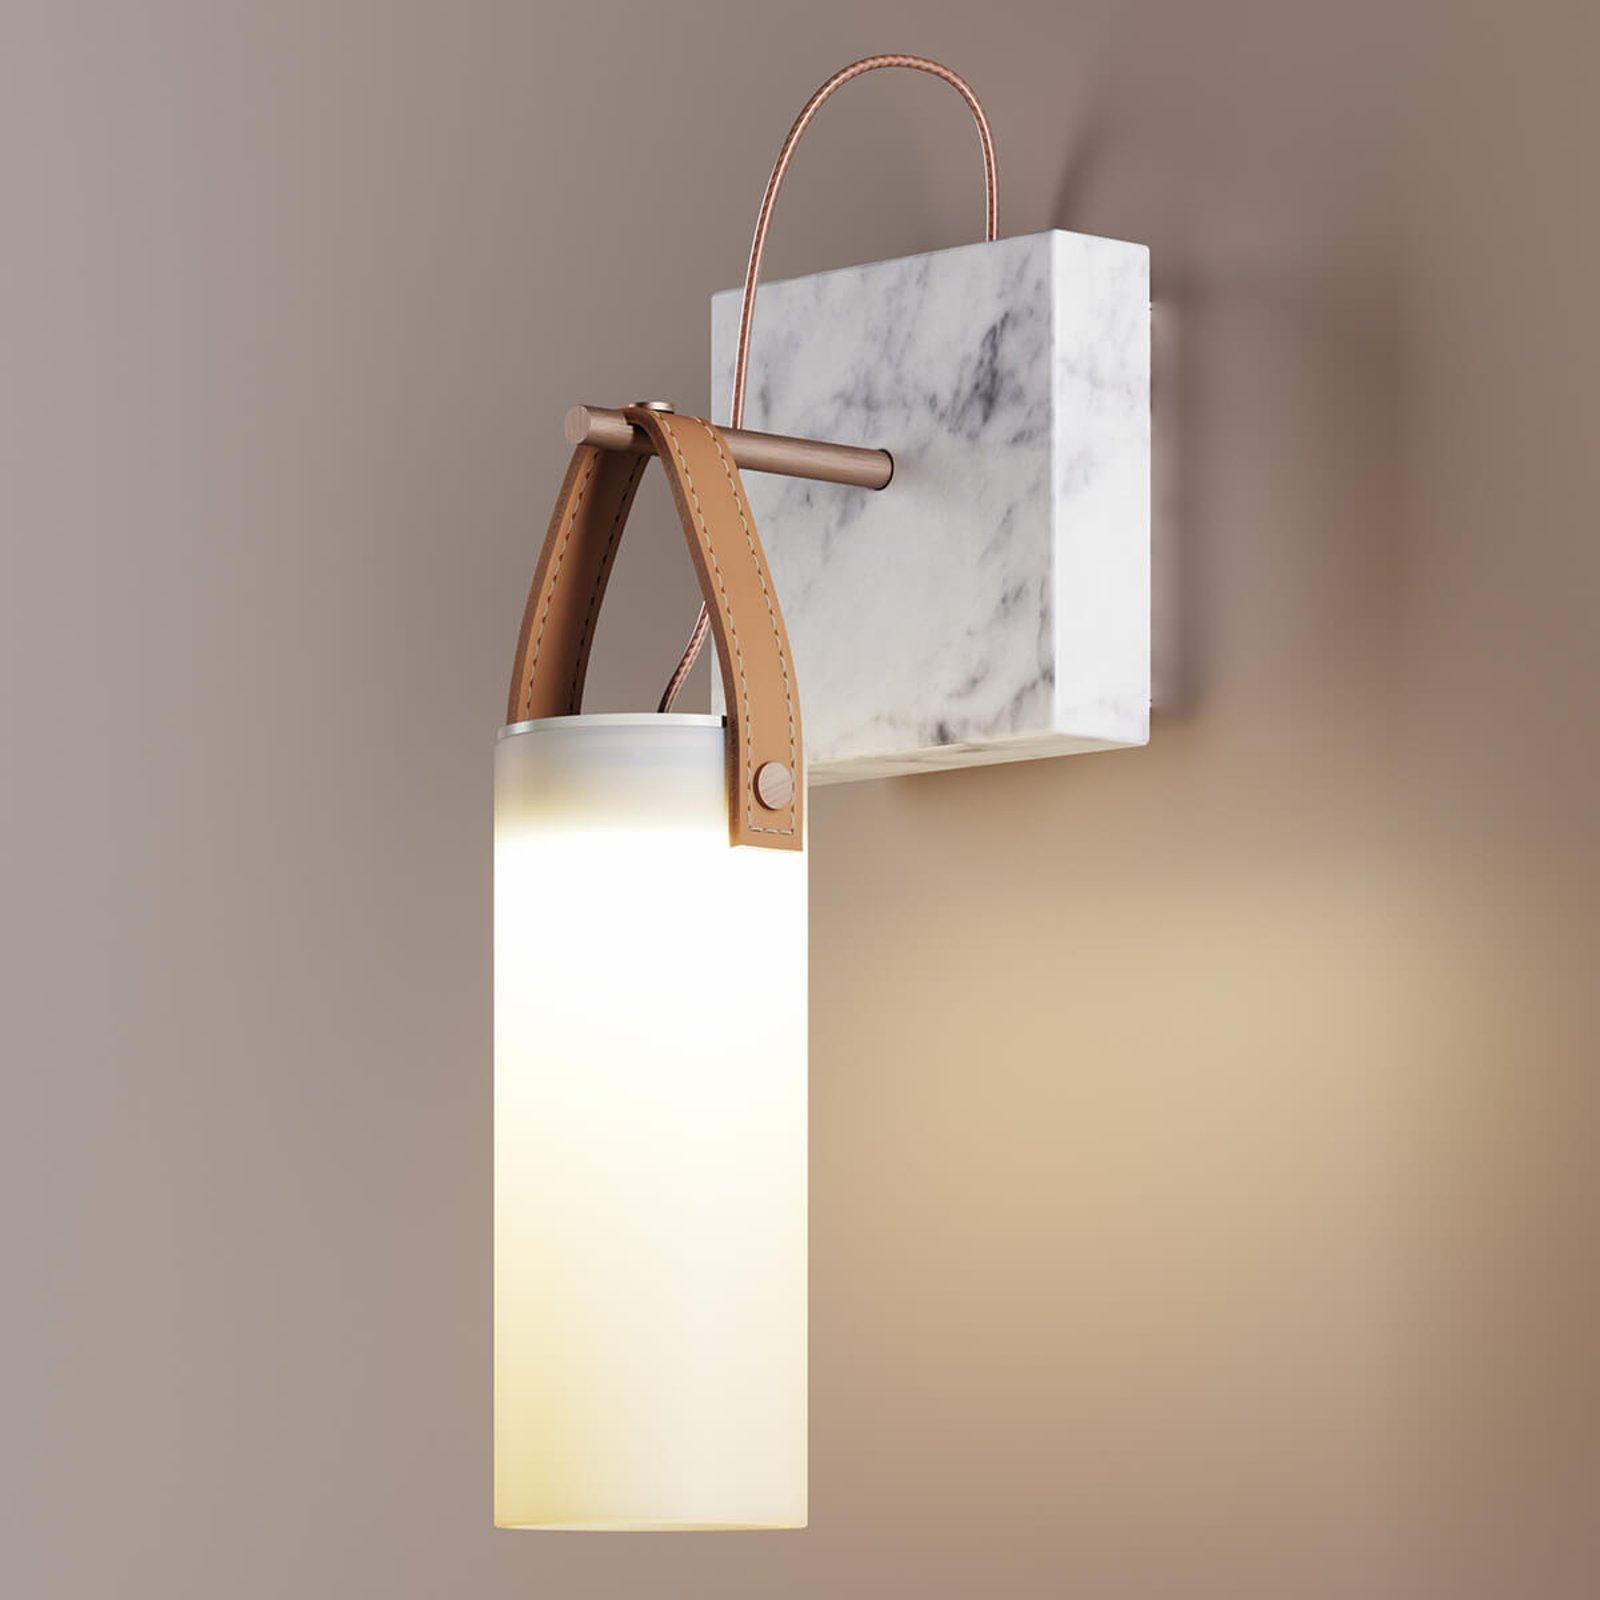 Designer-vägglampa Galerie med LED-lampor